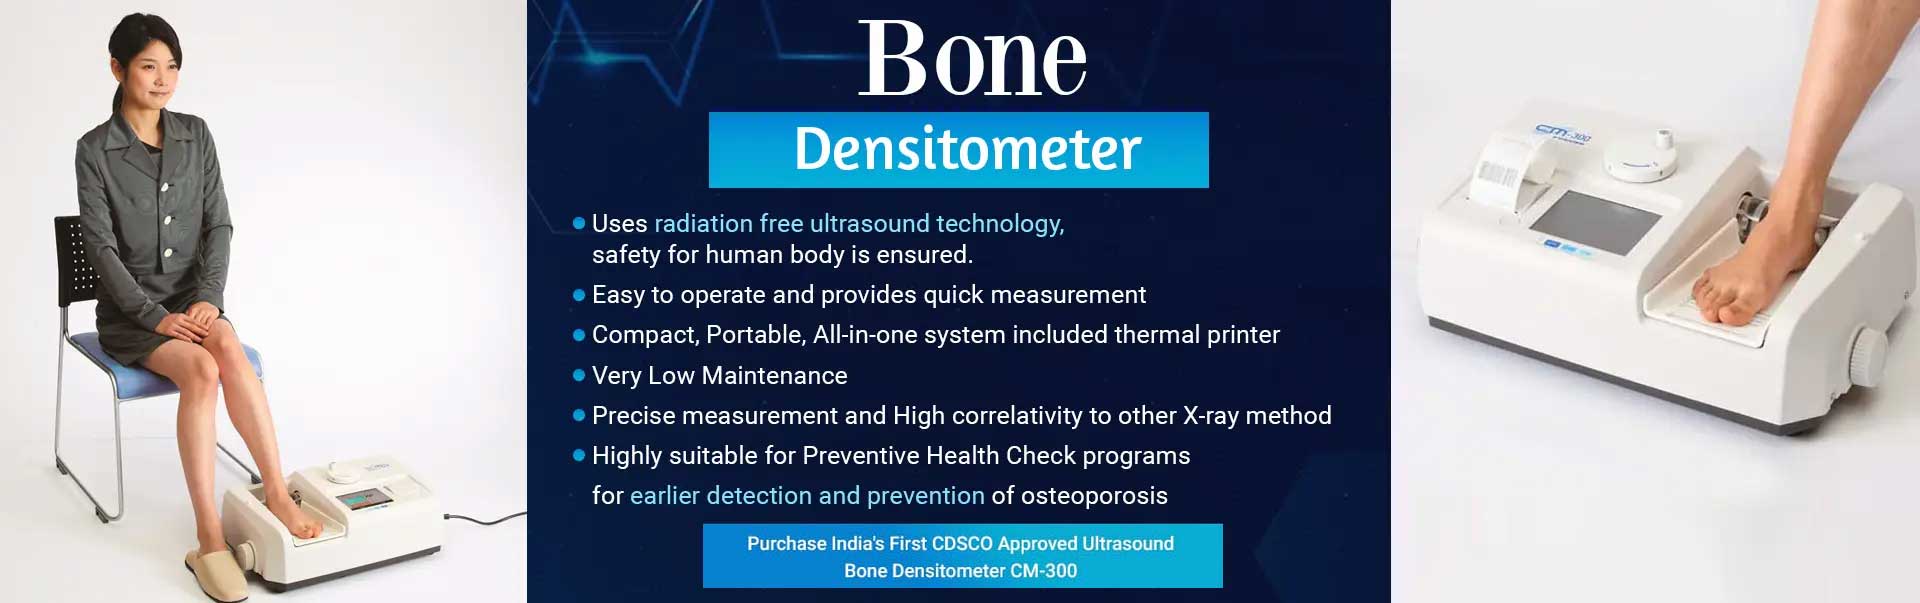 Bone Densitometer Manufacturers in Ajmer